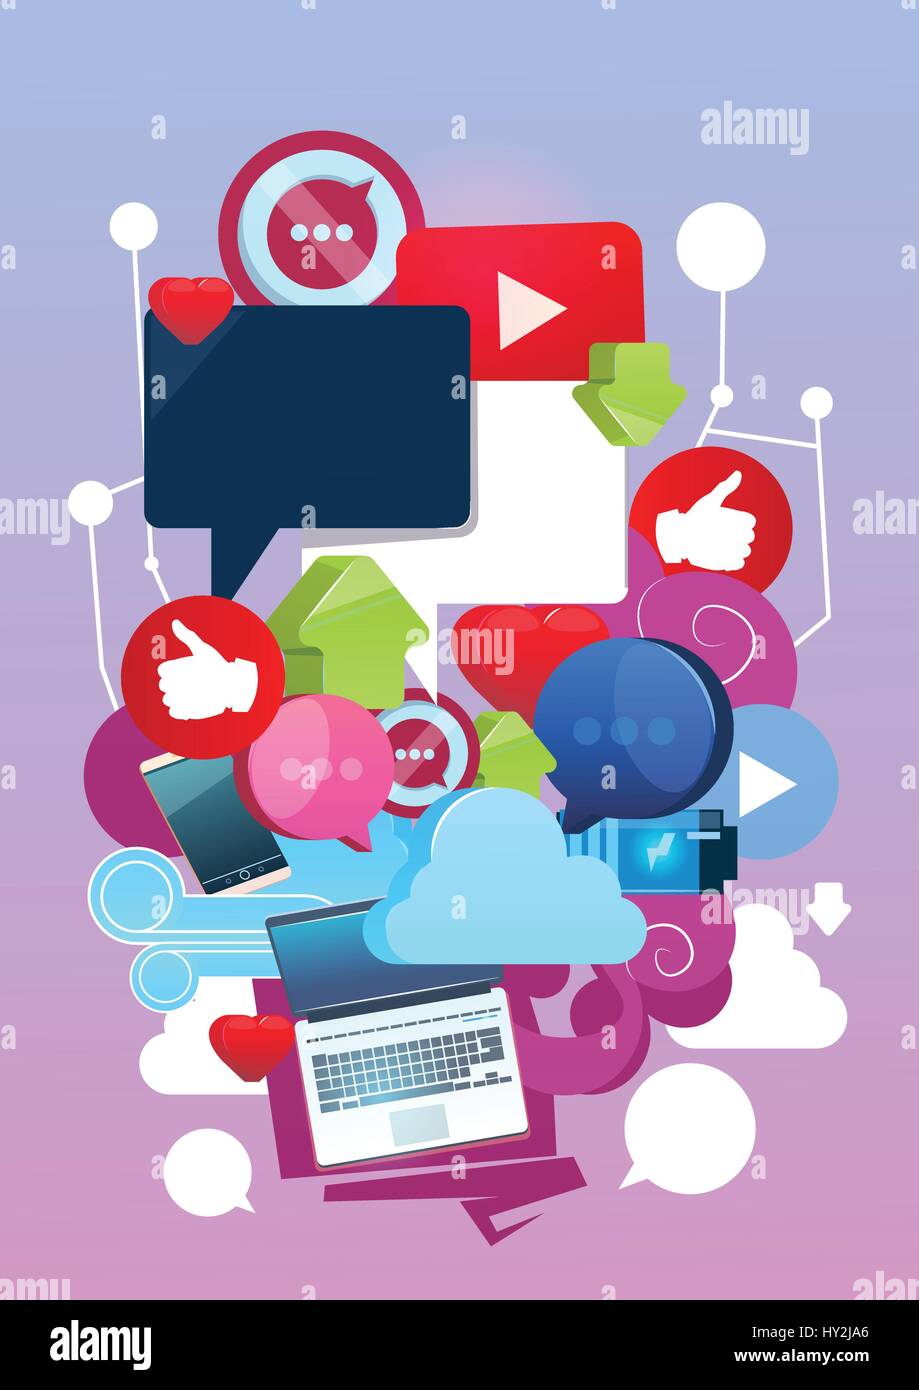 Internet Online Blogging Social Network Communication Concept Stock Vector